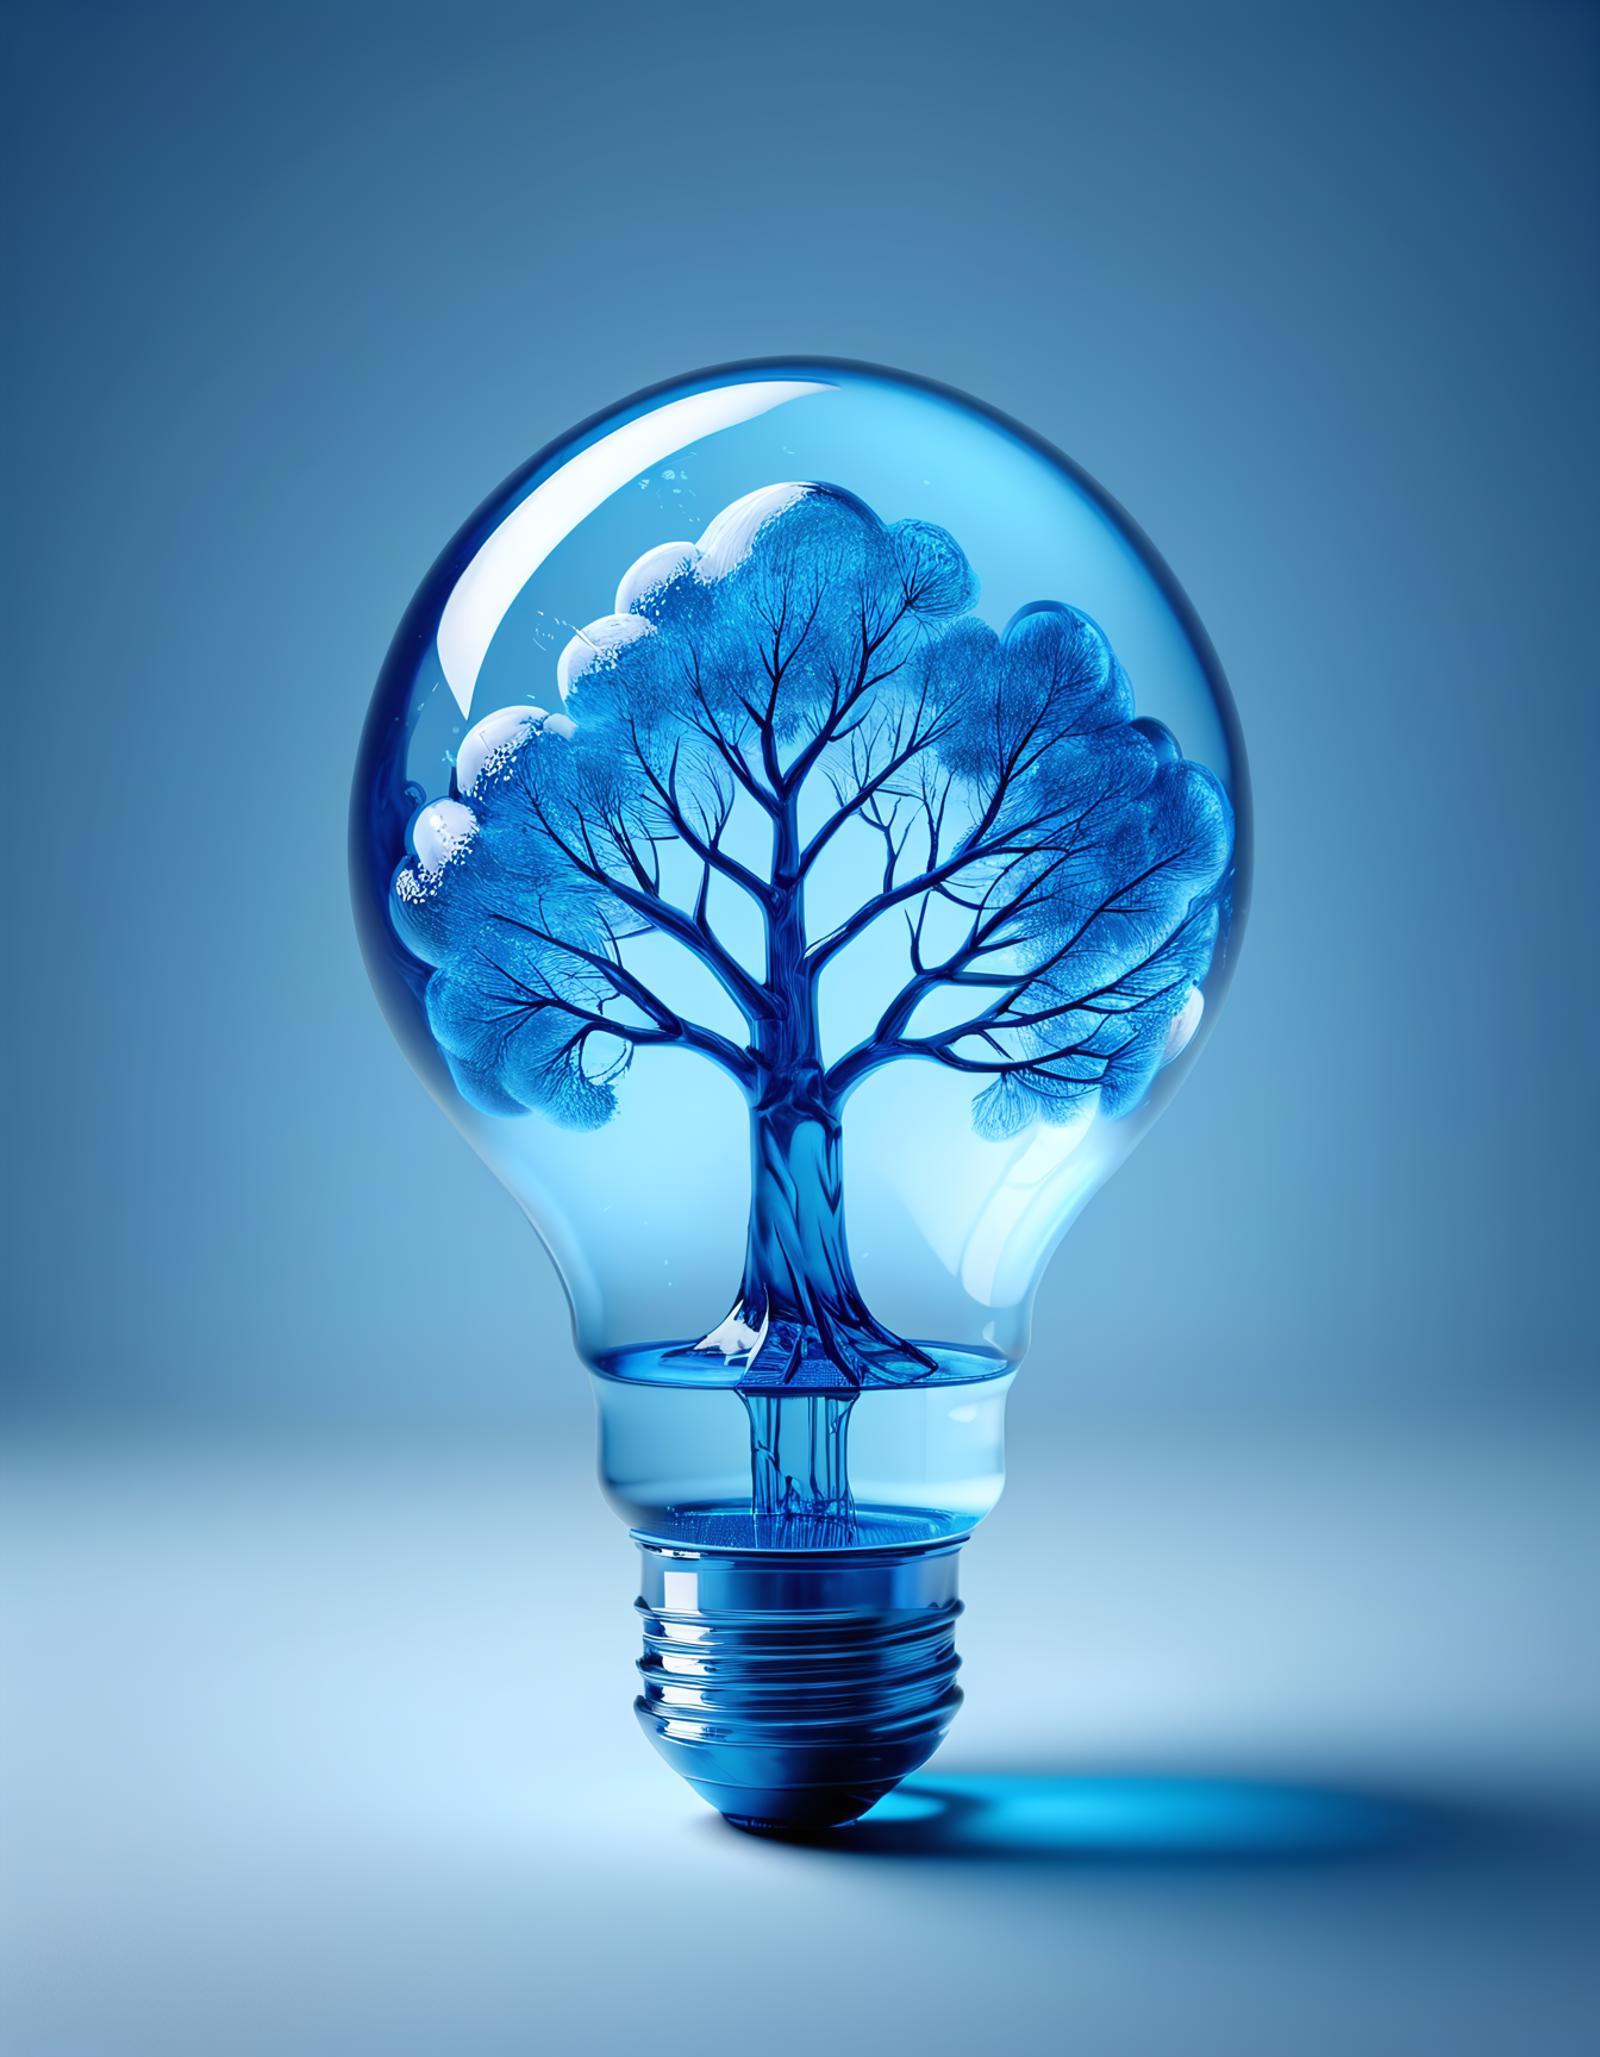 A blue light bulb with a tree inside it.